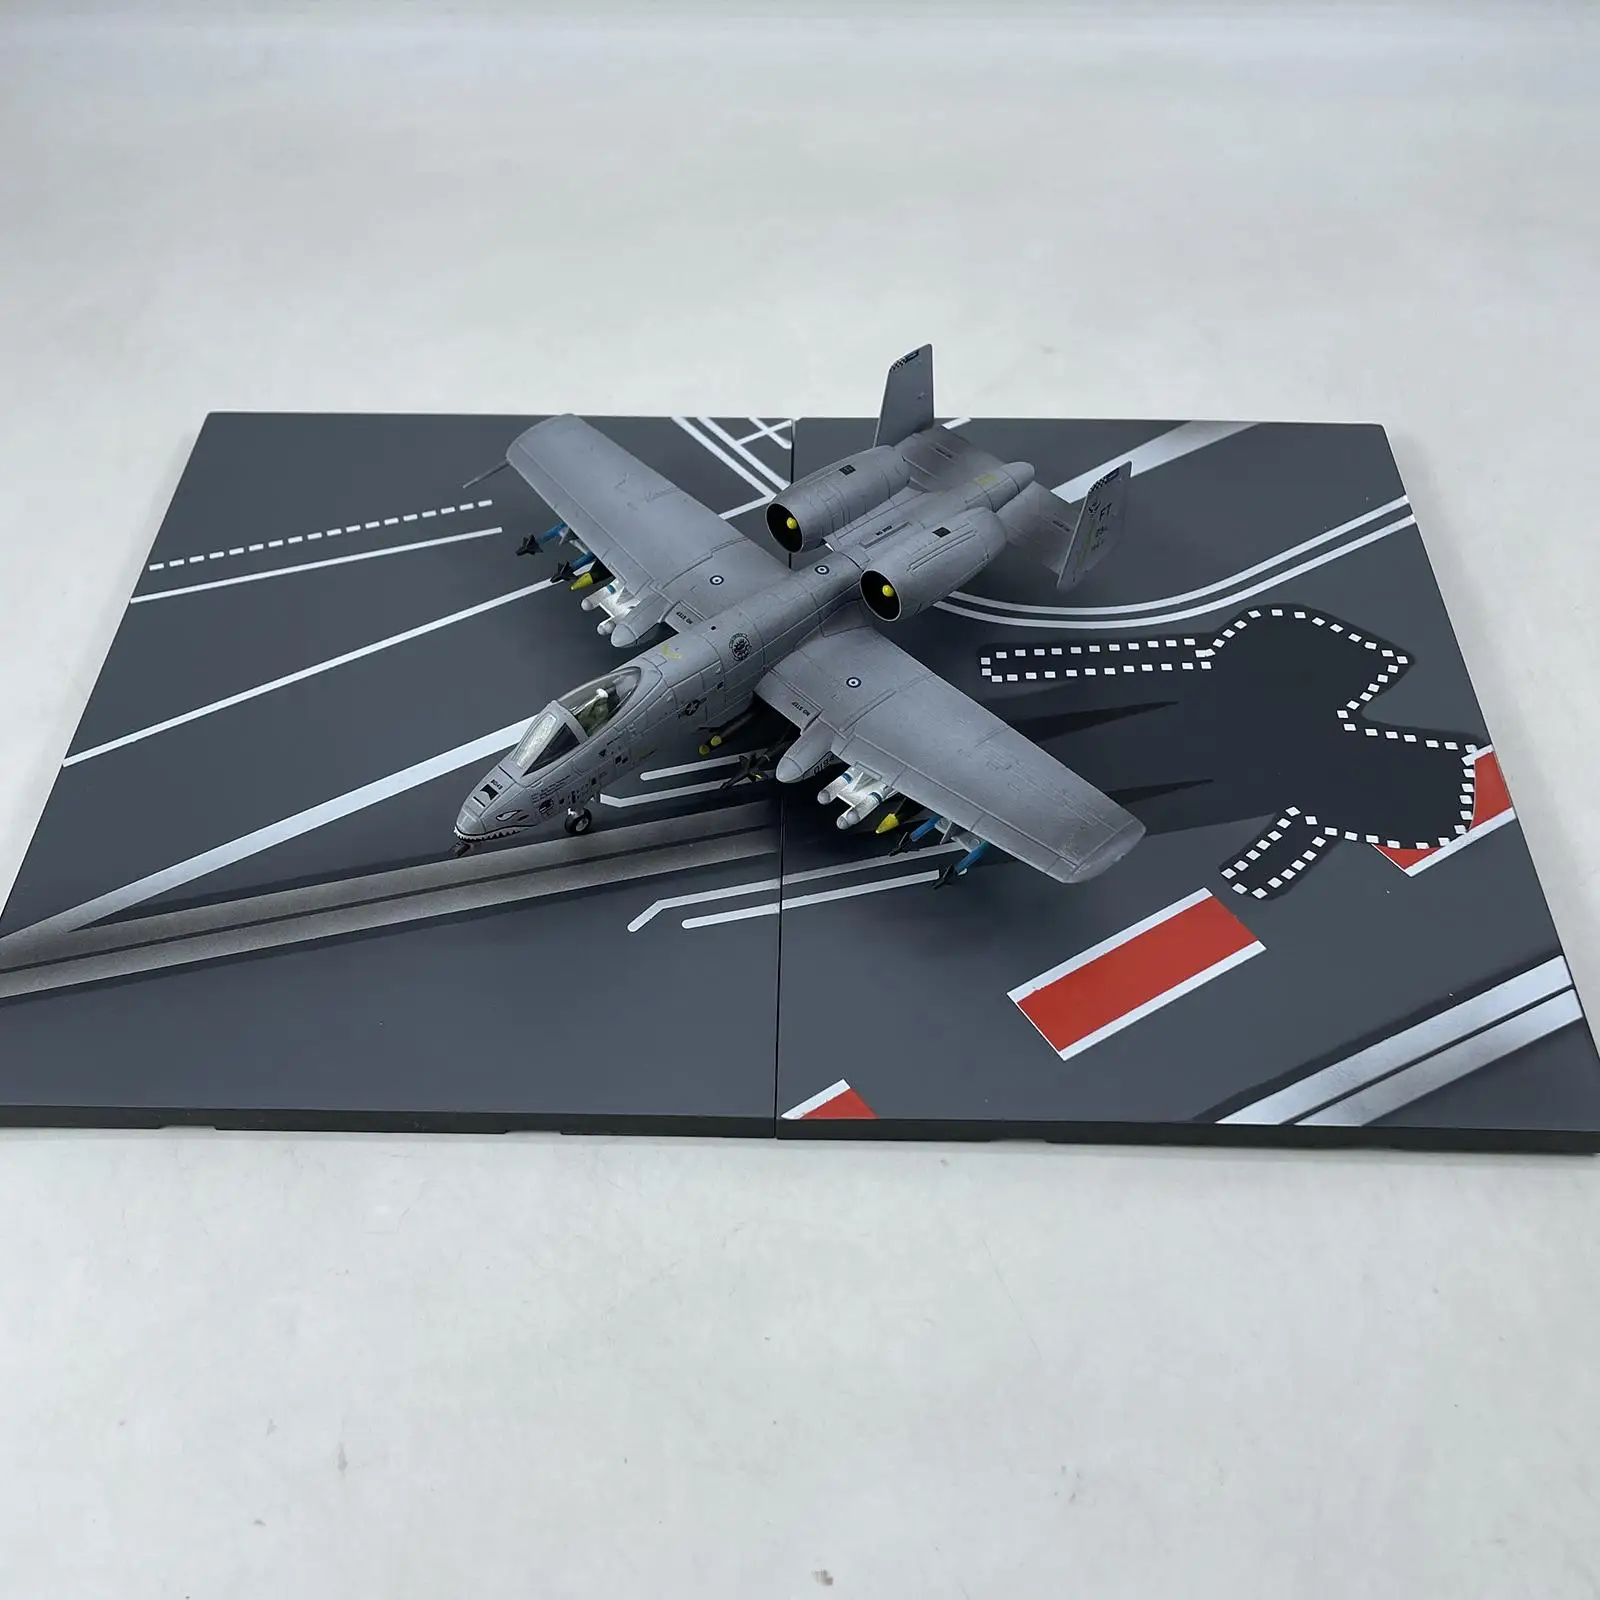  Runway Platform Plastic Simulation  Apron Toy Vehicle Static